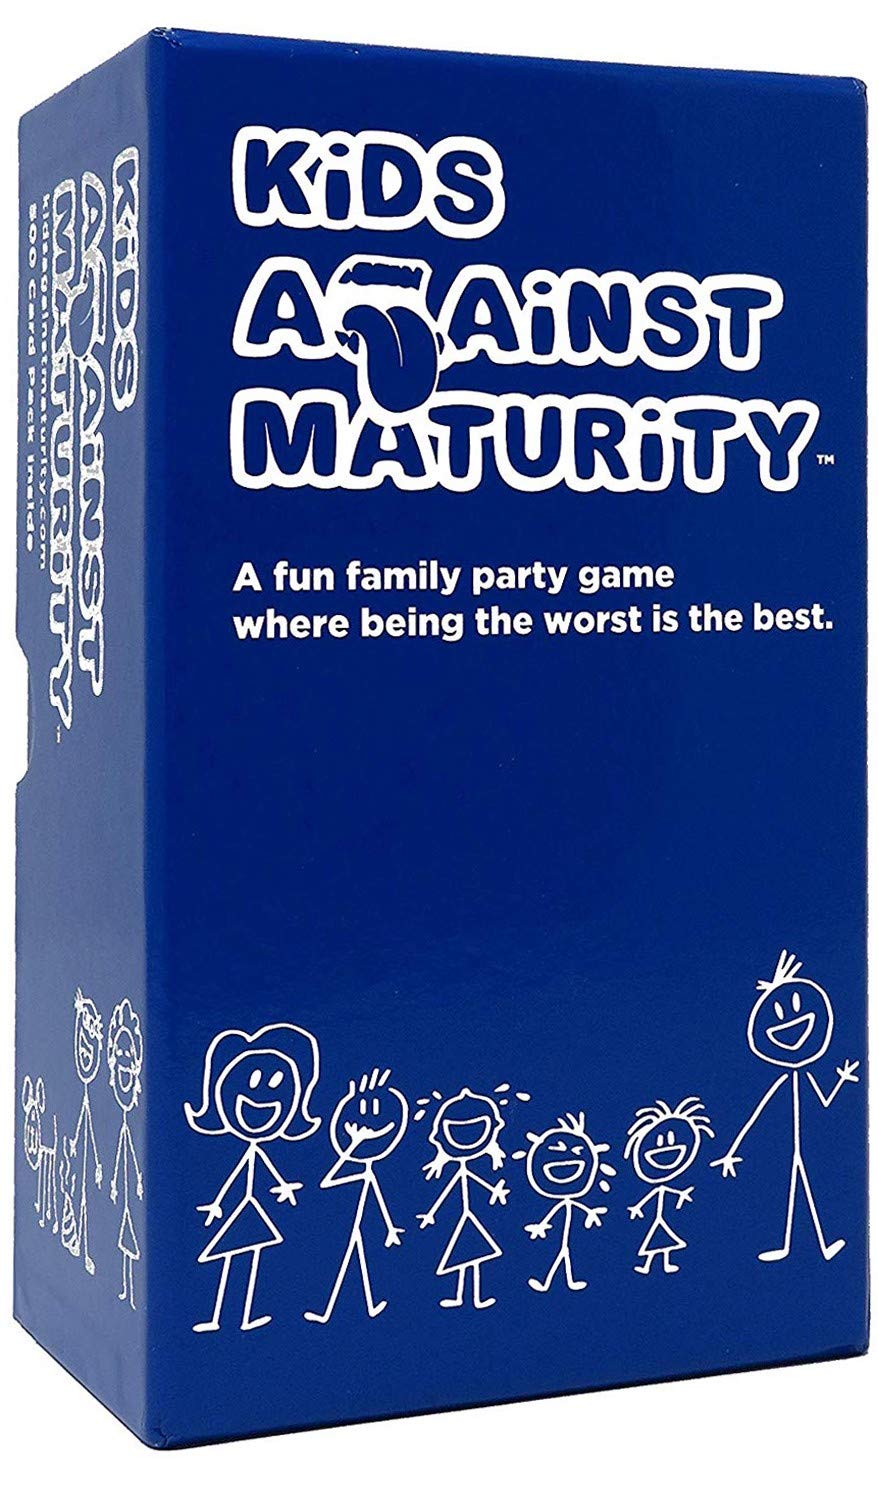 Amazon: $19.49 Kids Against Maturity Card Game (reg. $34.99; SAVE 44%)